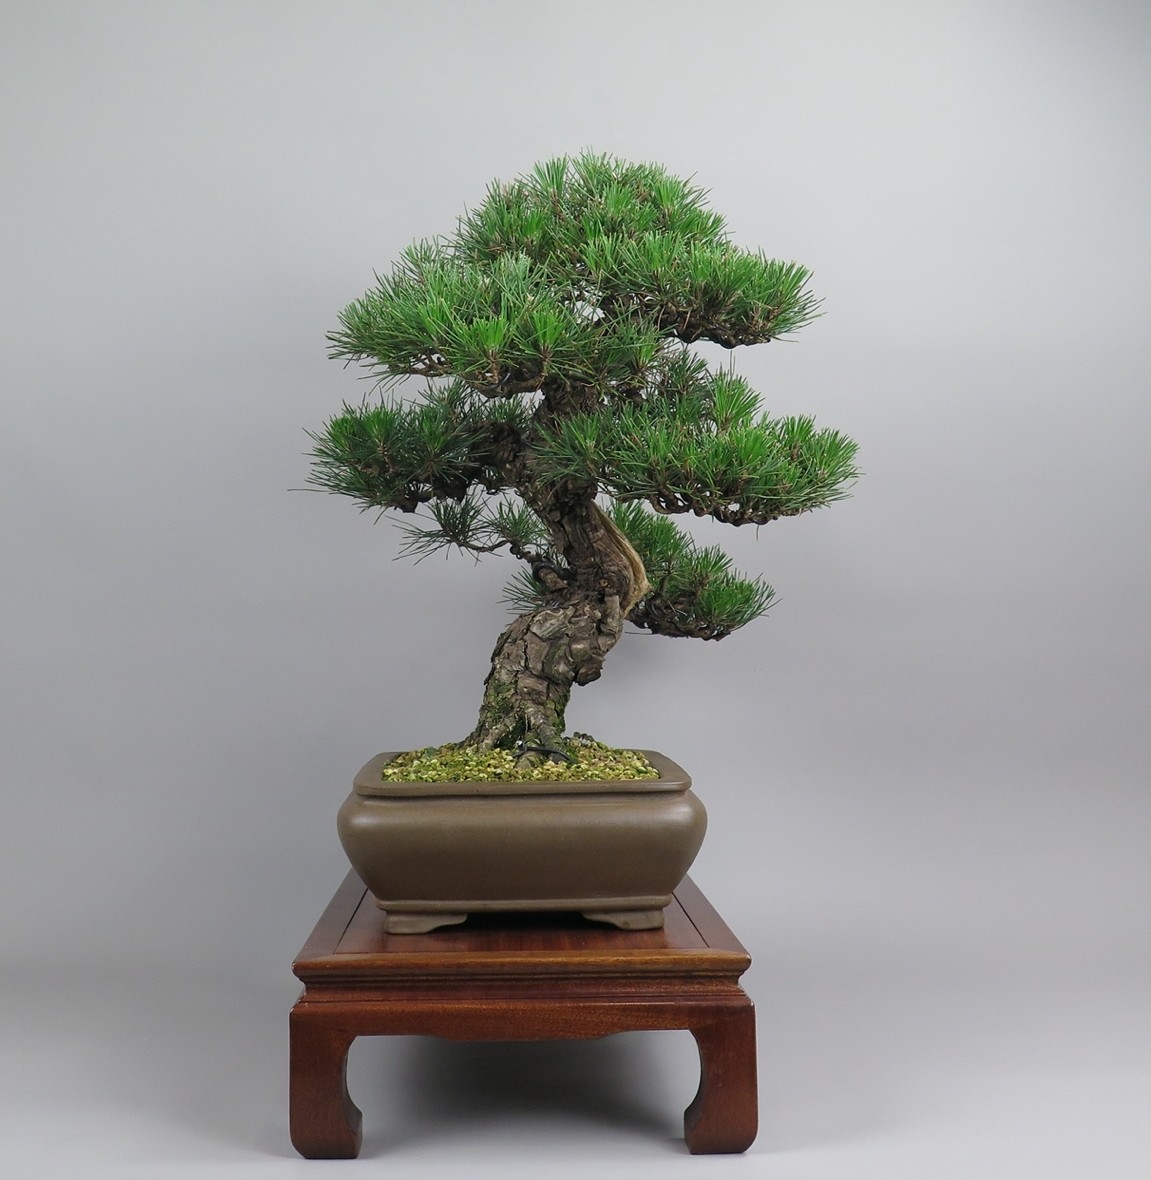 Bonsai de Pinus tumbergii, lateral derecho.